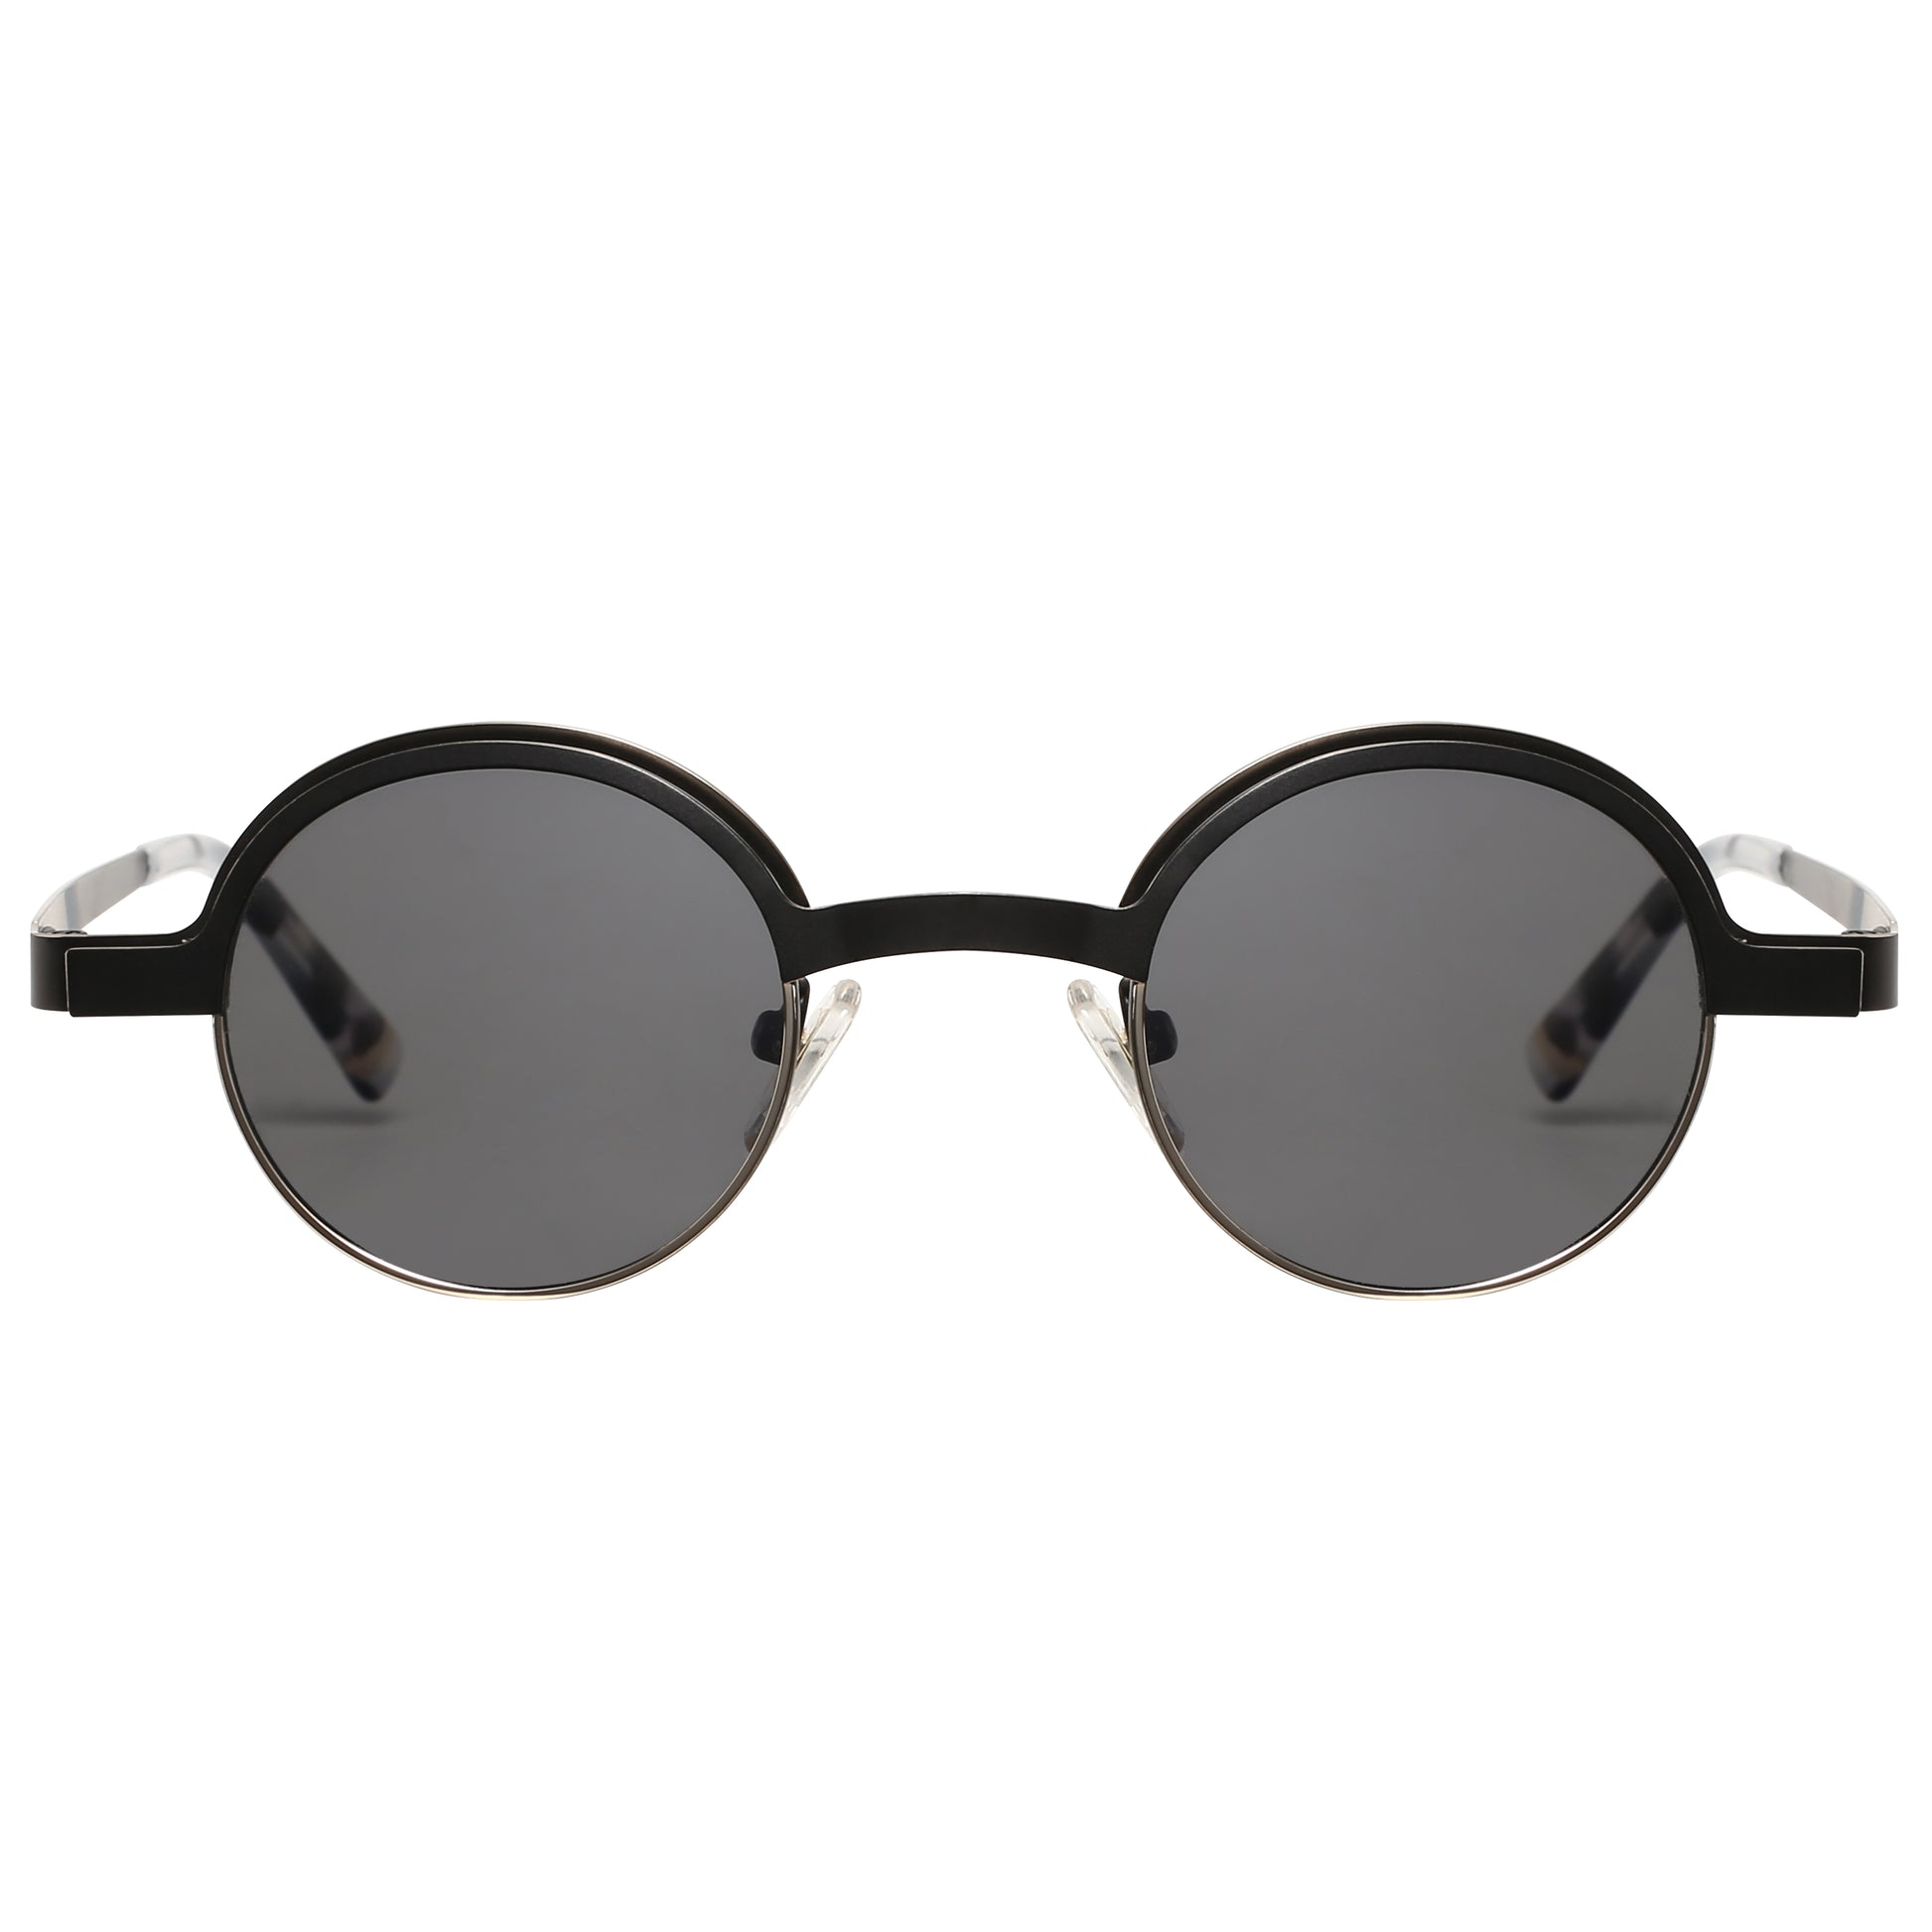 Mokki Round & Retro sunglasses in Black